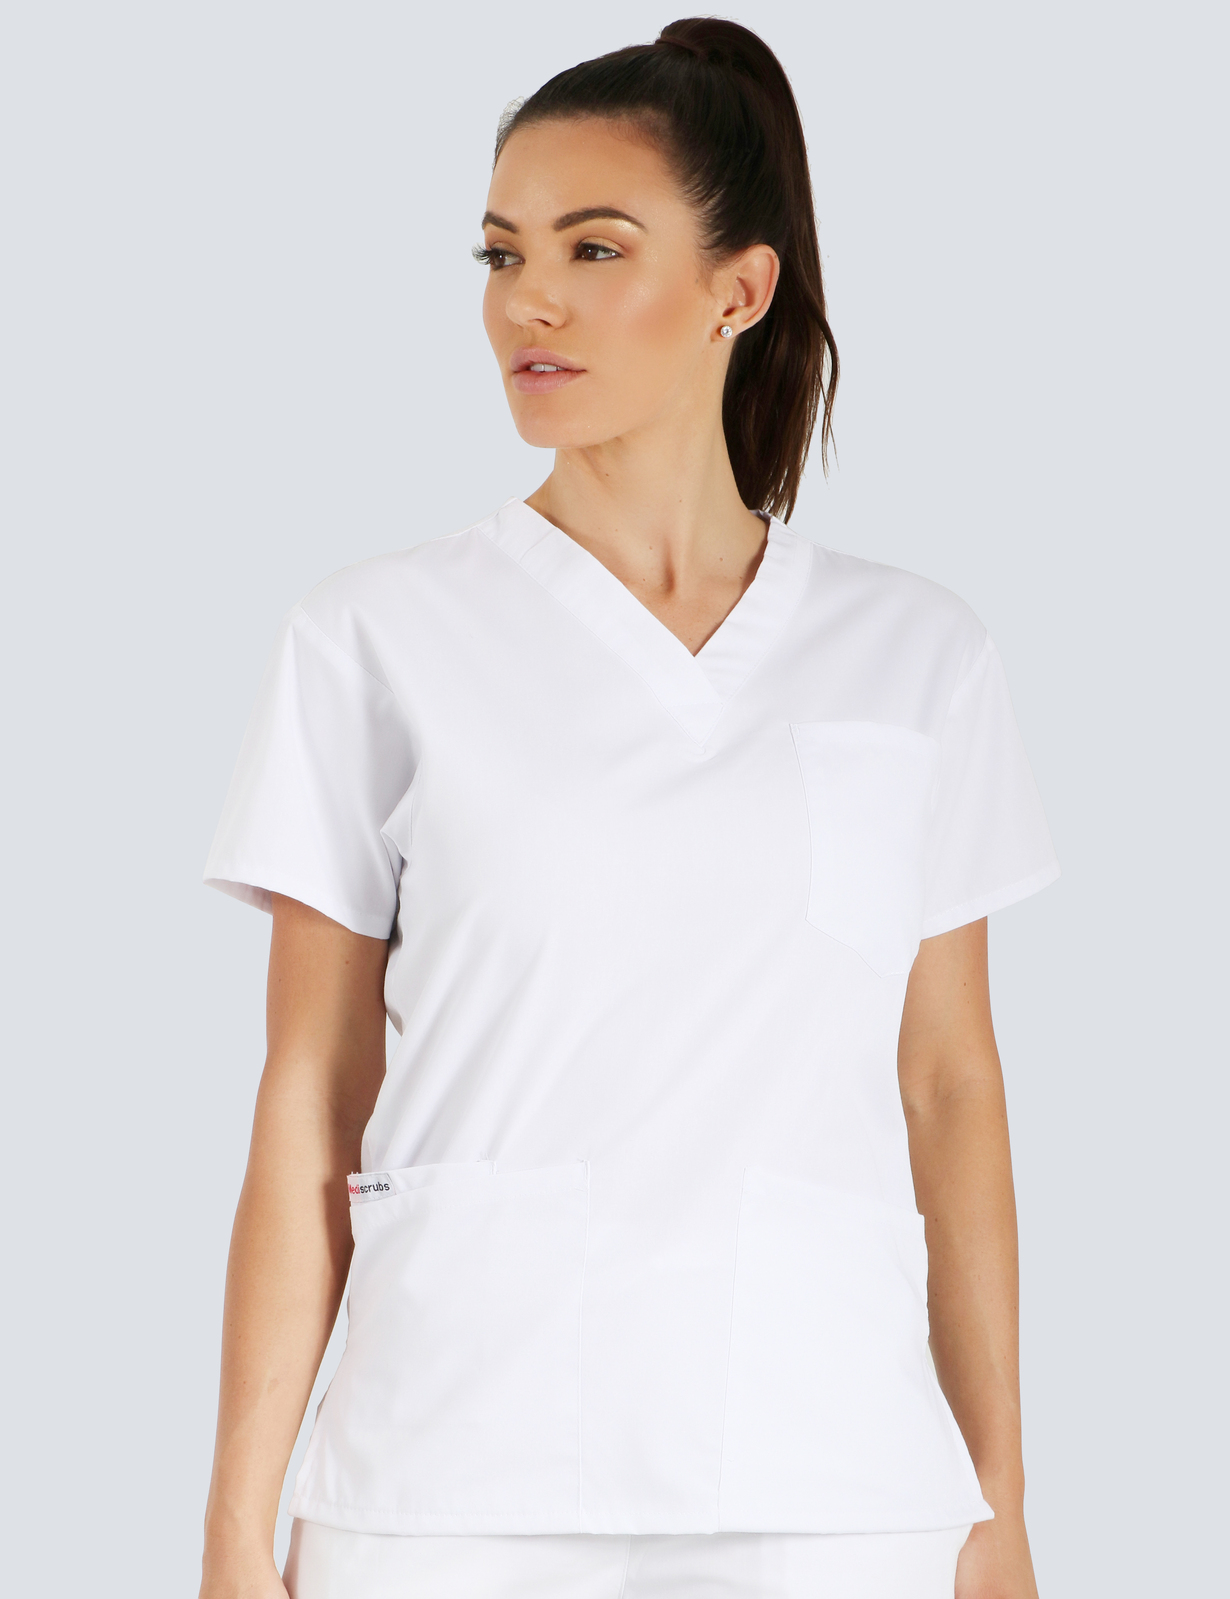 Queensland Children's Hospital Emergency Department Doctor Uniform Top  Bundle (4 Pocket Top in White  incl Logos)